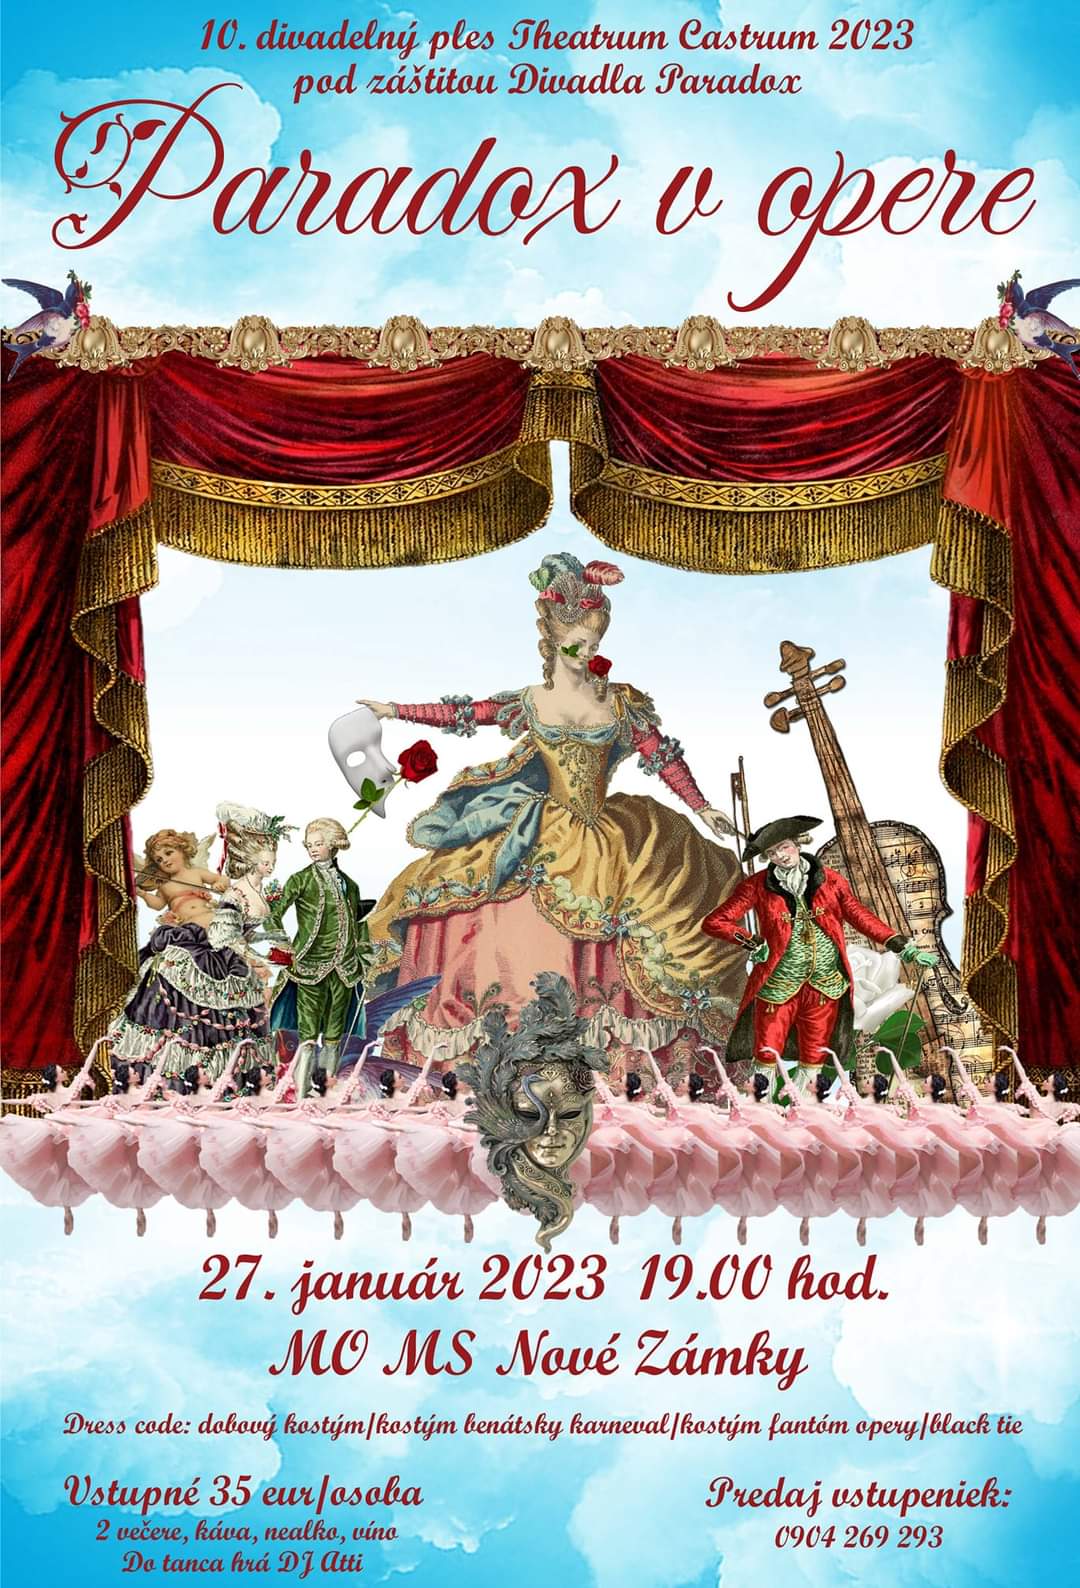 Paradox v opere 2023 Nov Zmky - 10. divadeln ples Theatrum Castrum